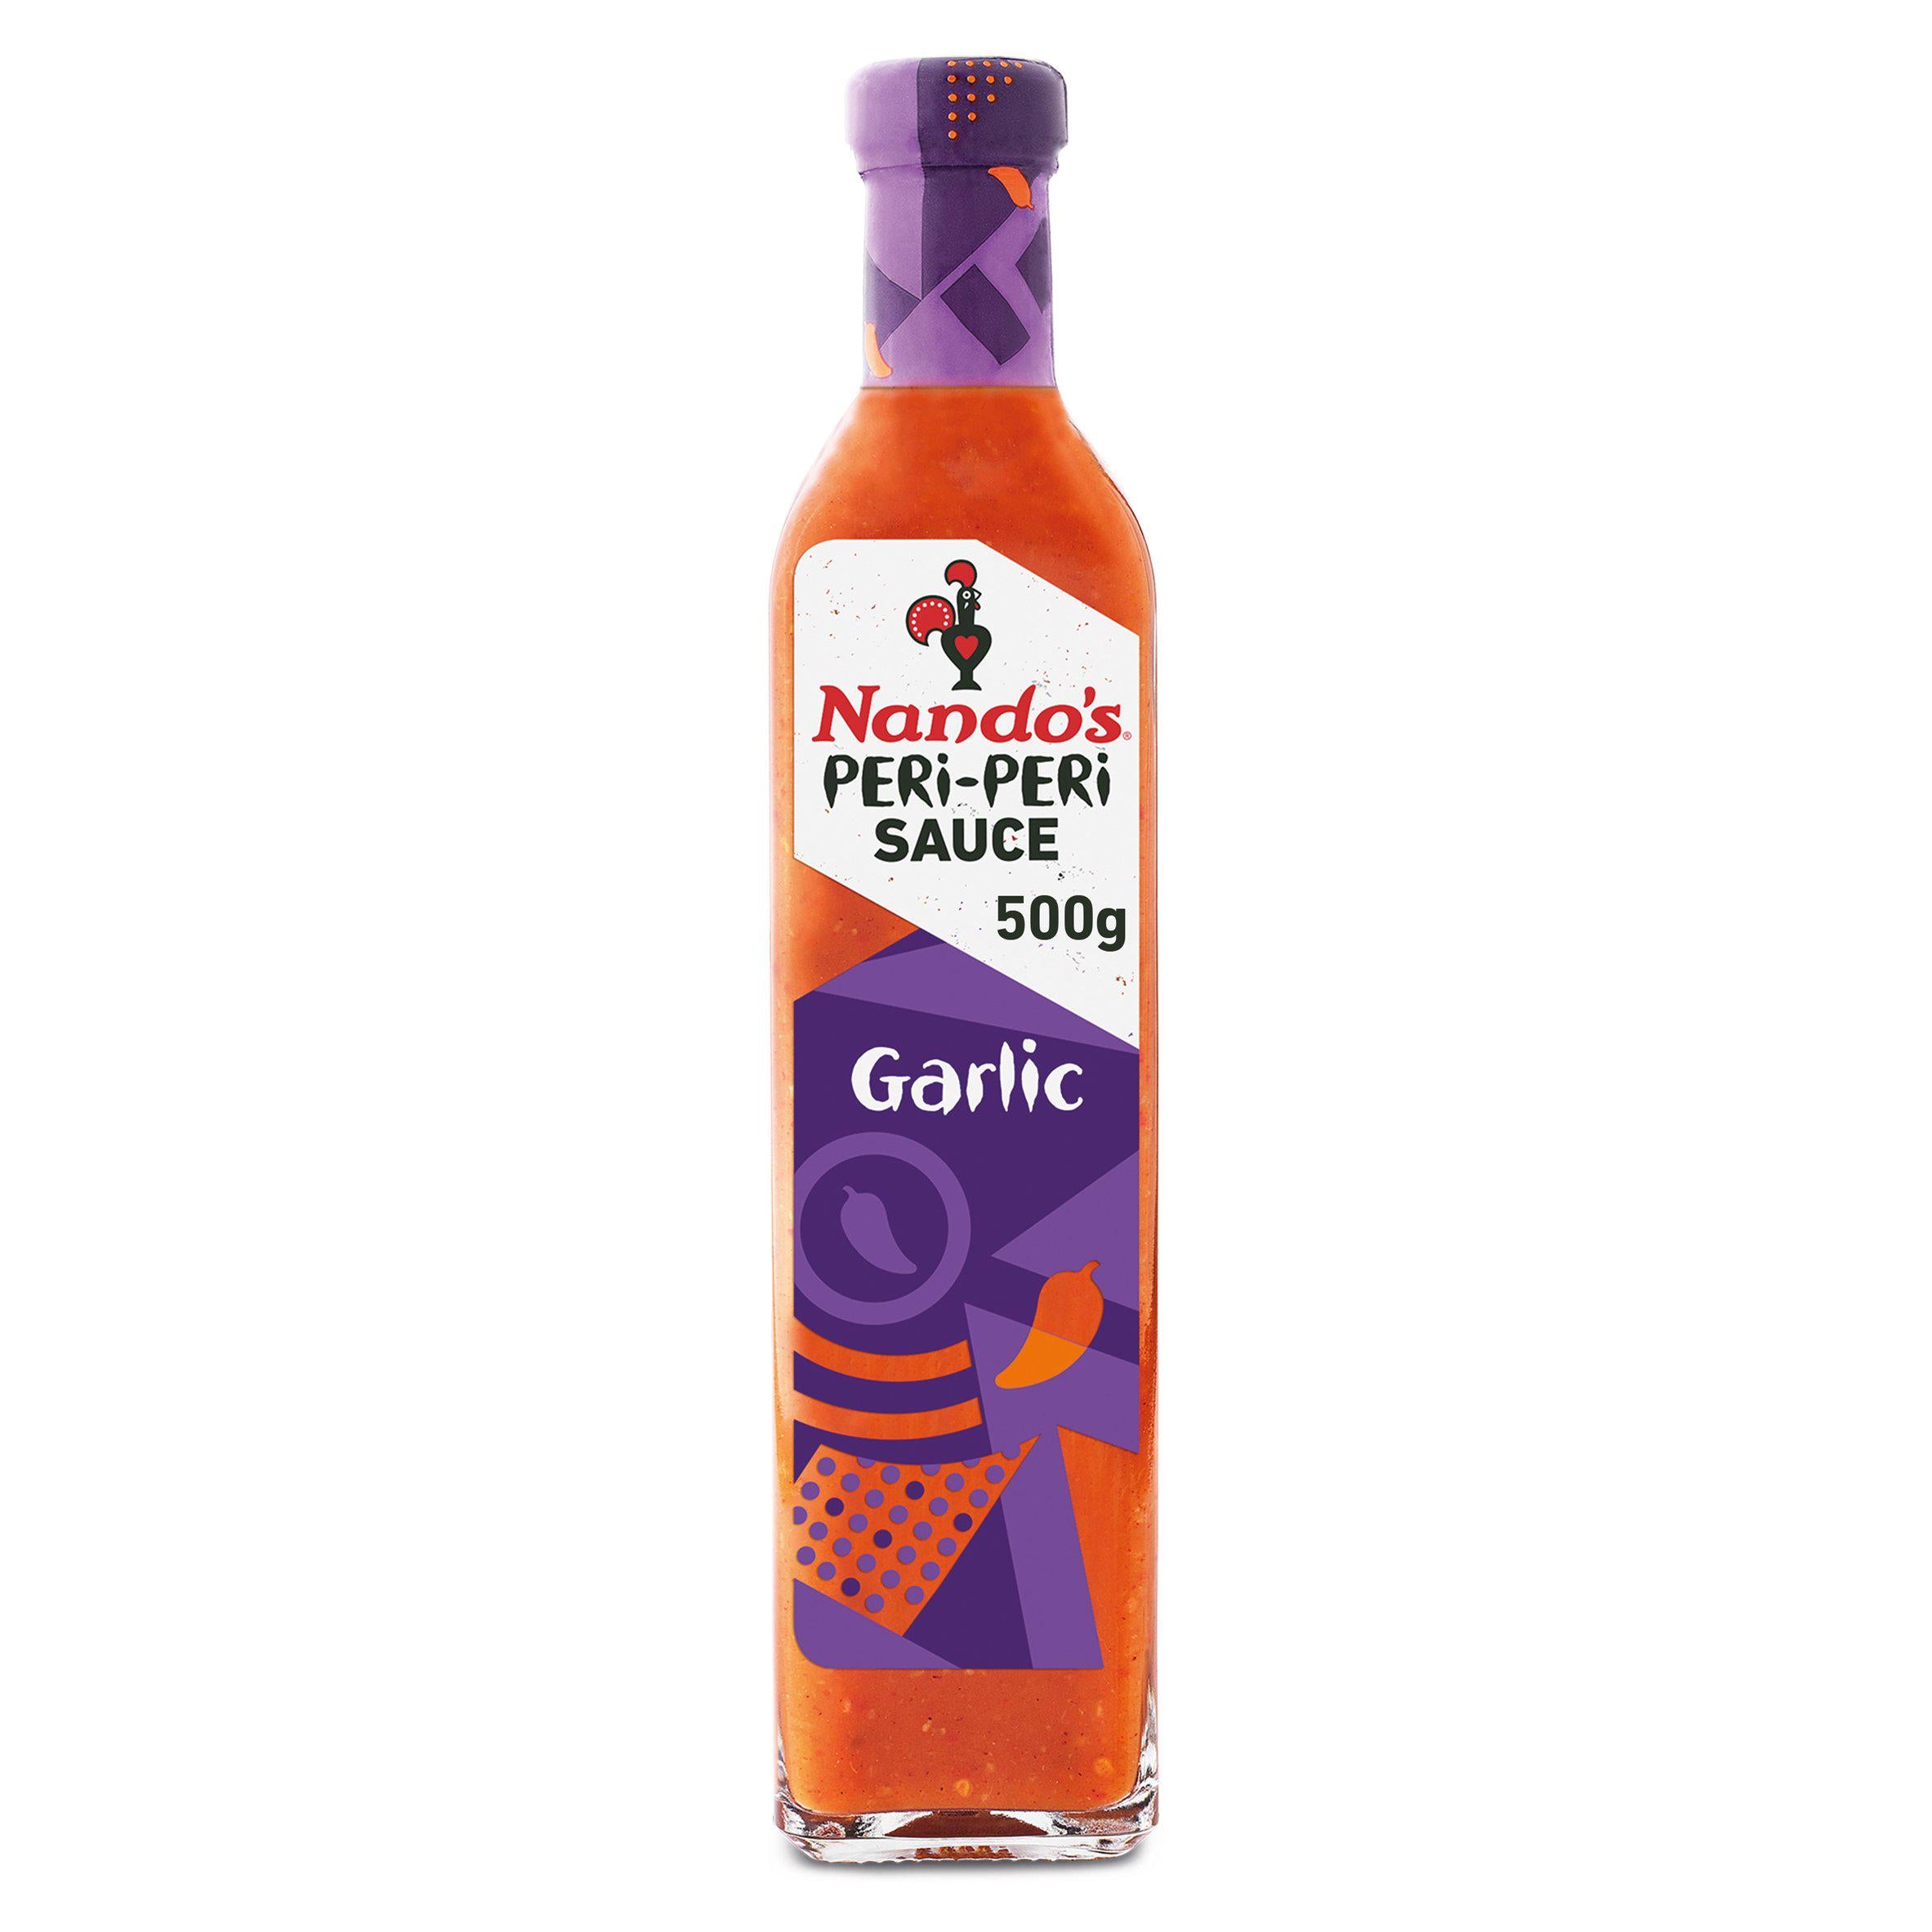 Nandos Peri Peri Garlic Sauce 500g @SaveCo Online Ltd